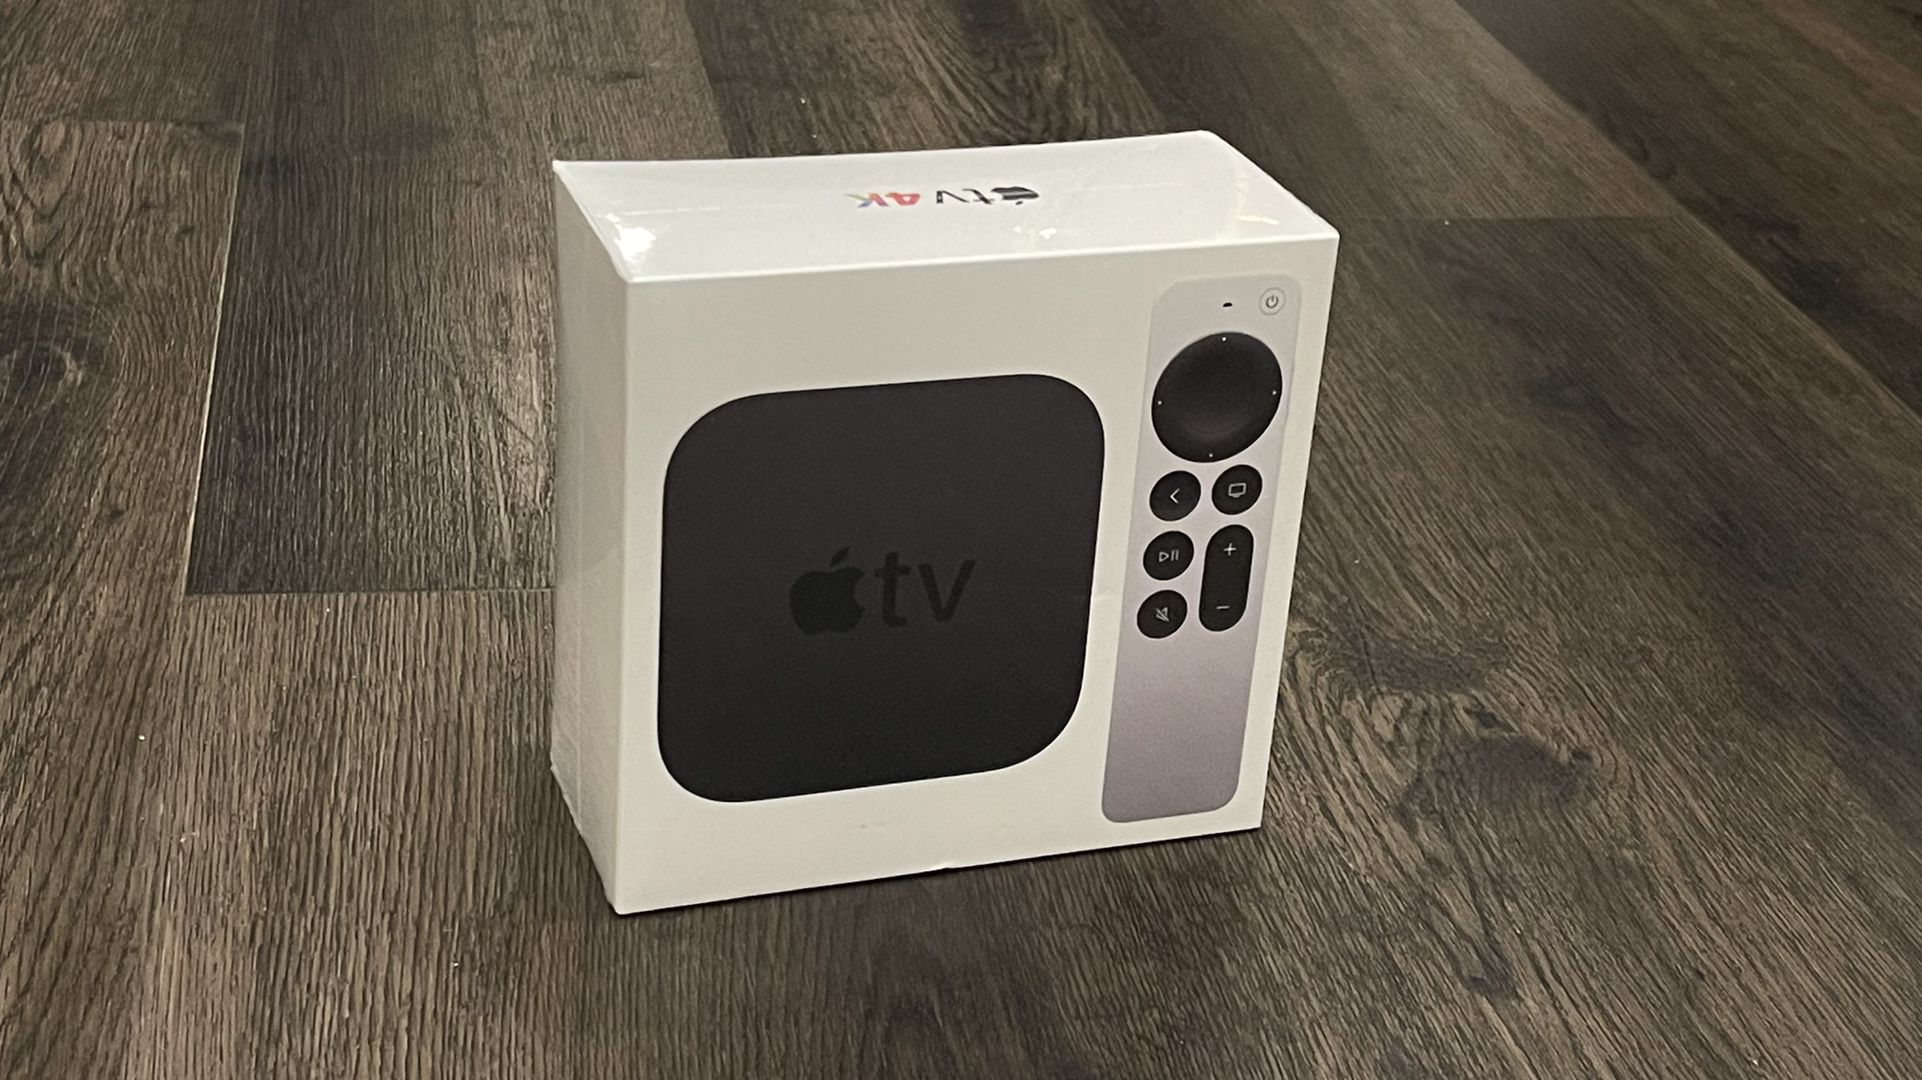 Apple TV 4K 64GB (2nd Generation) (Latest Model) - Black